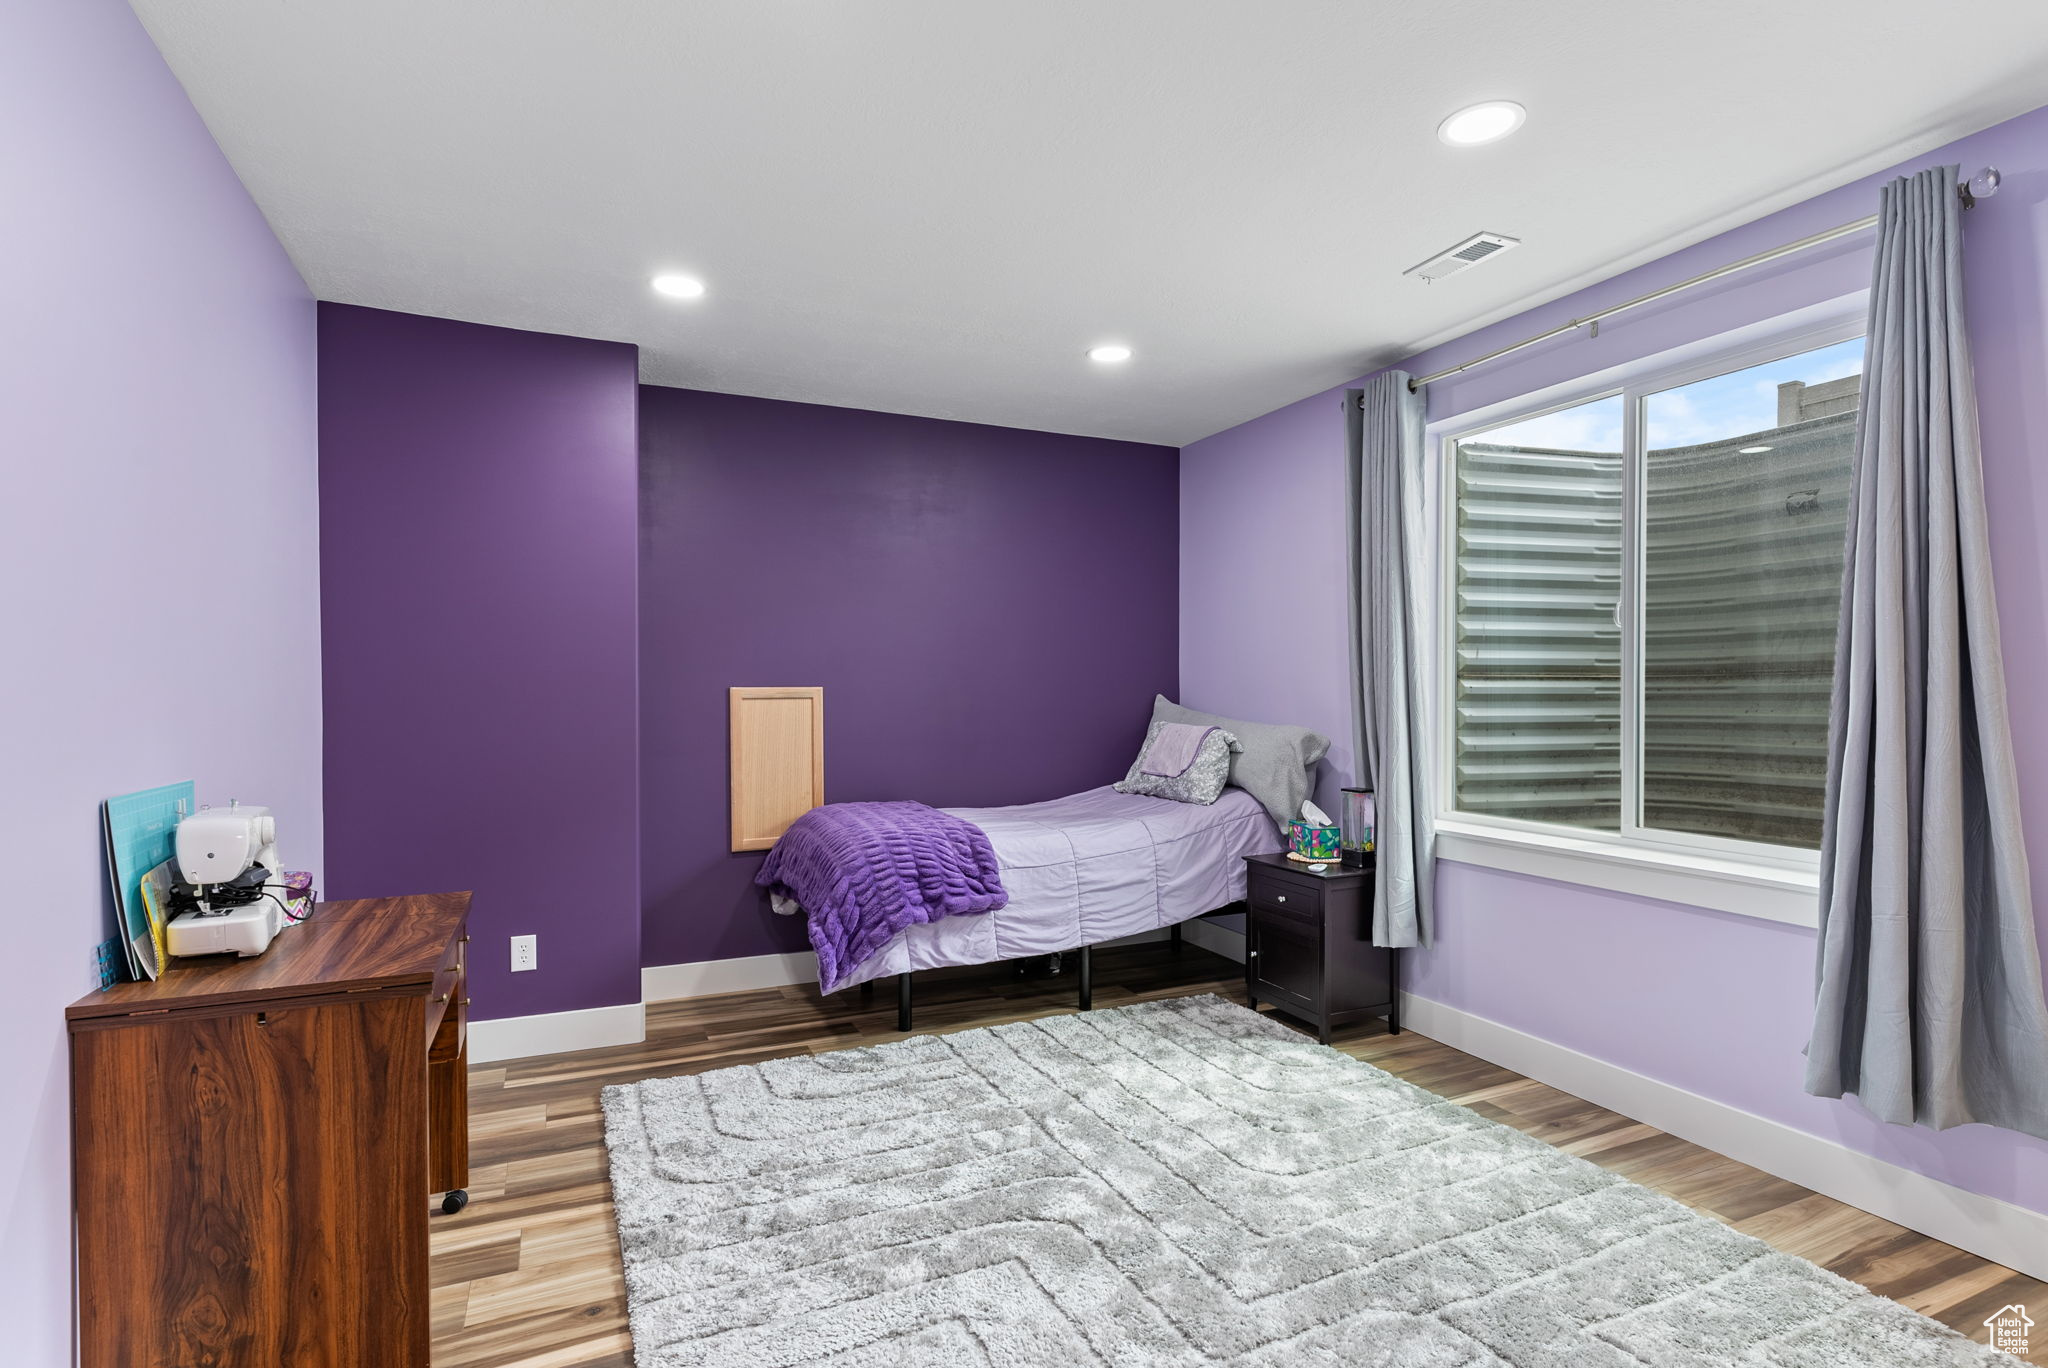 Bedroom featuring light wood-type flooring